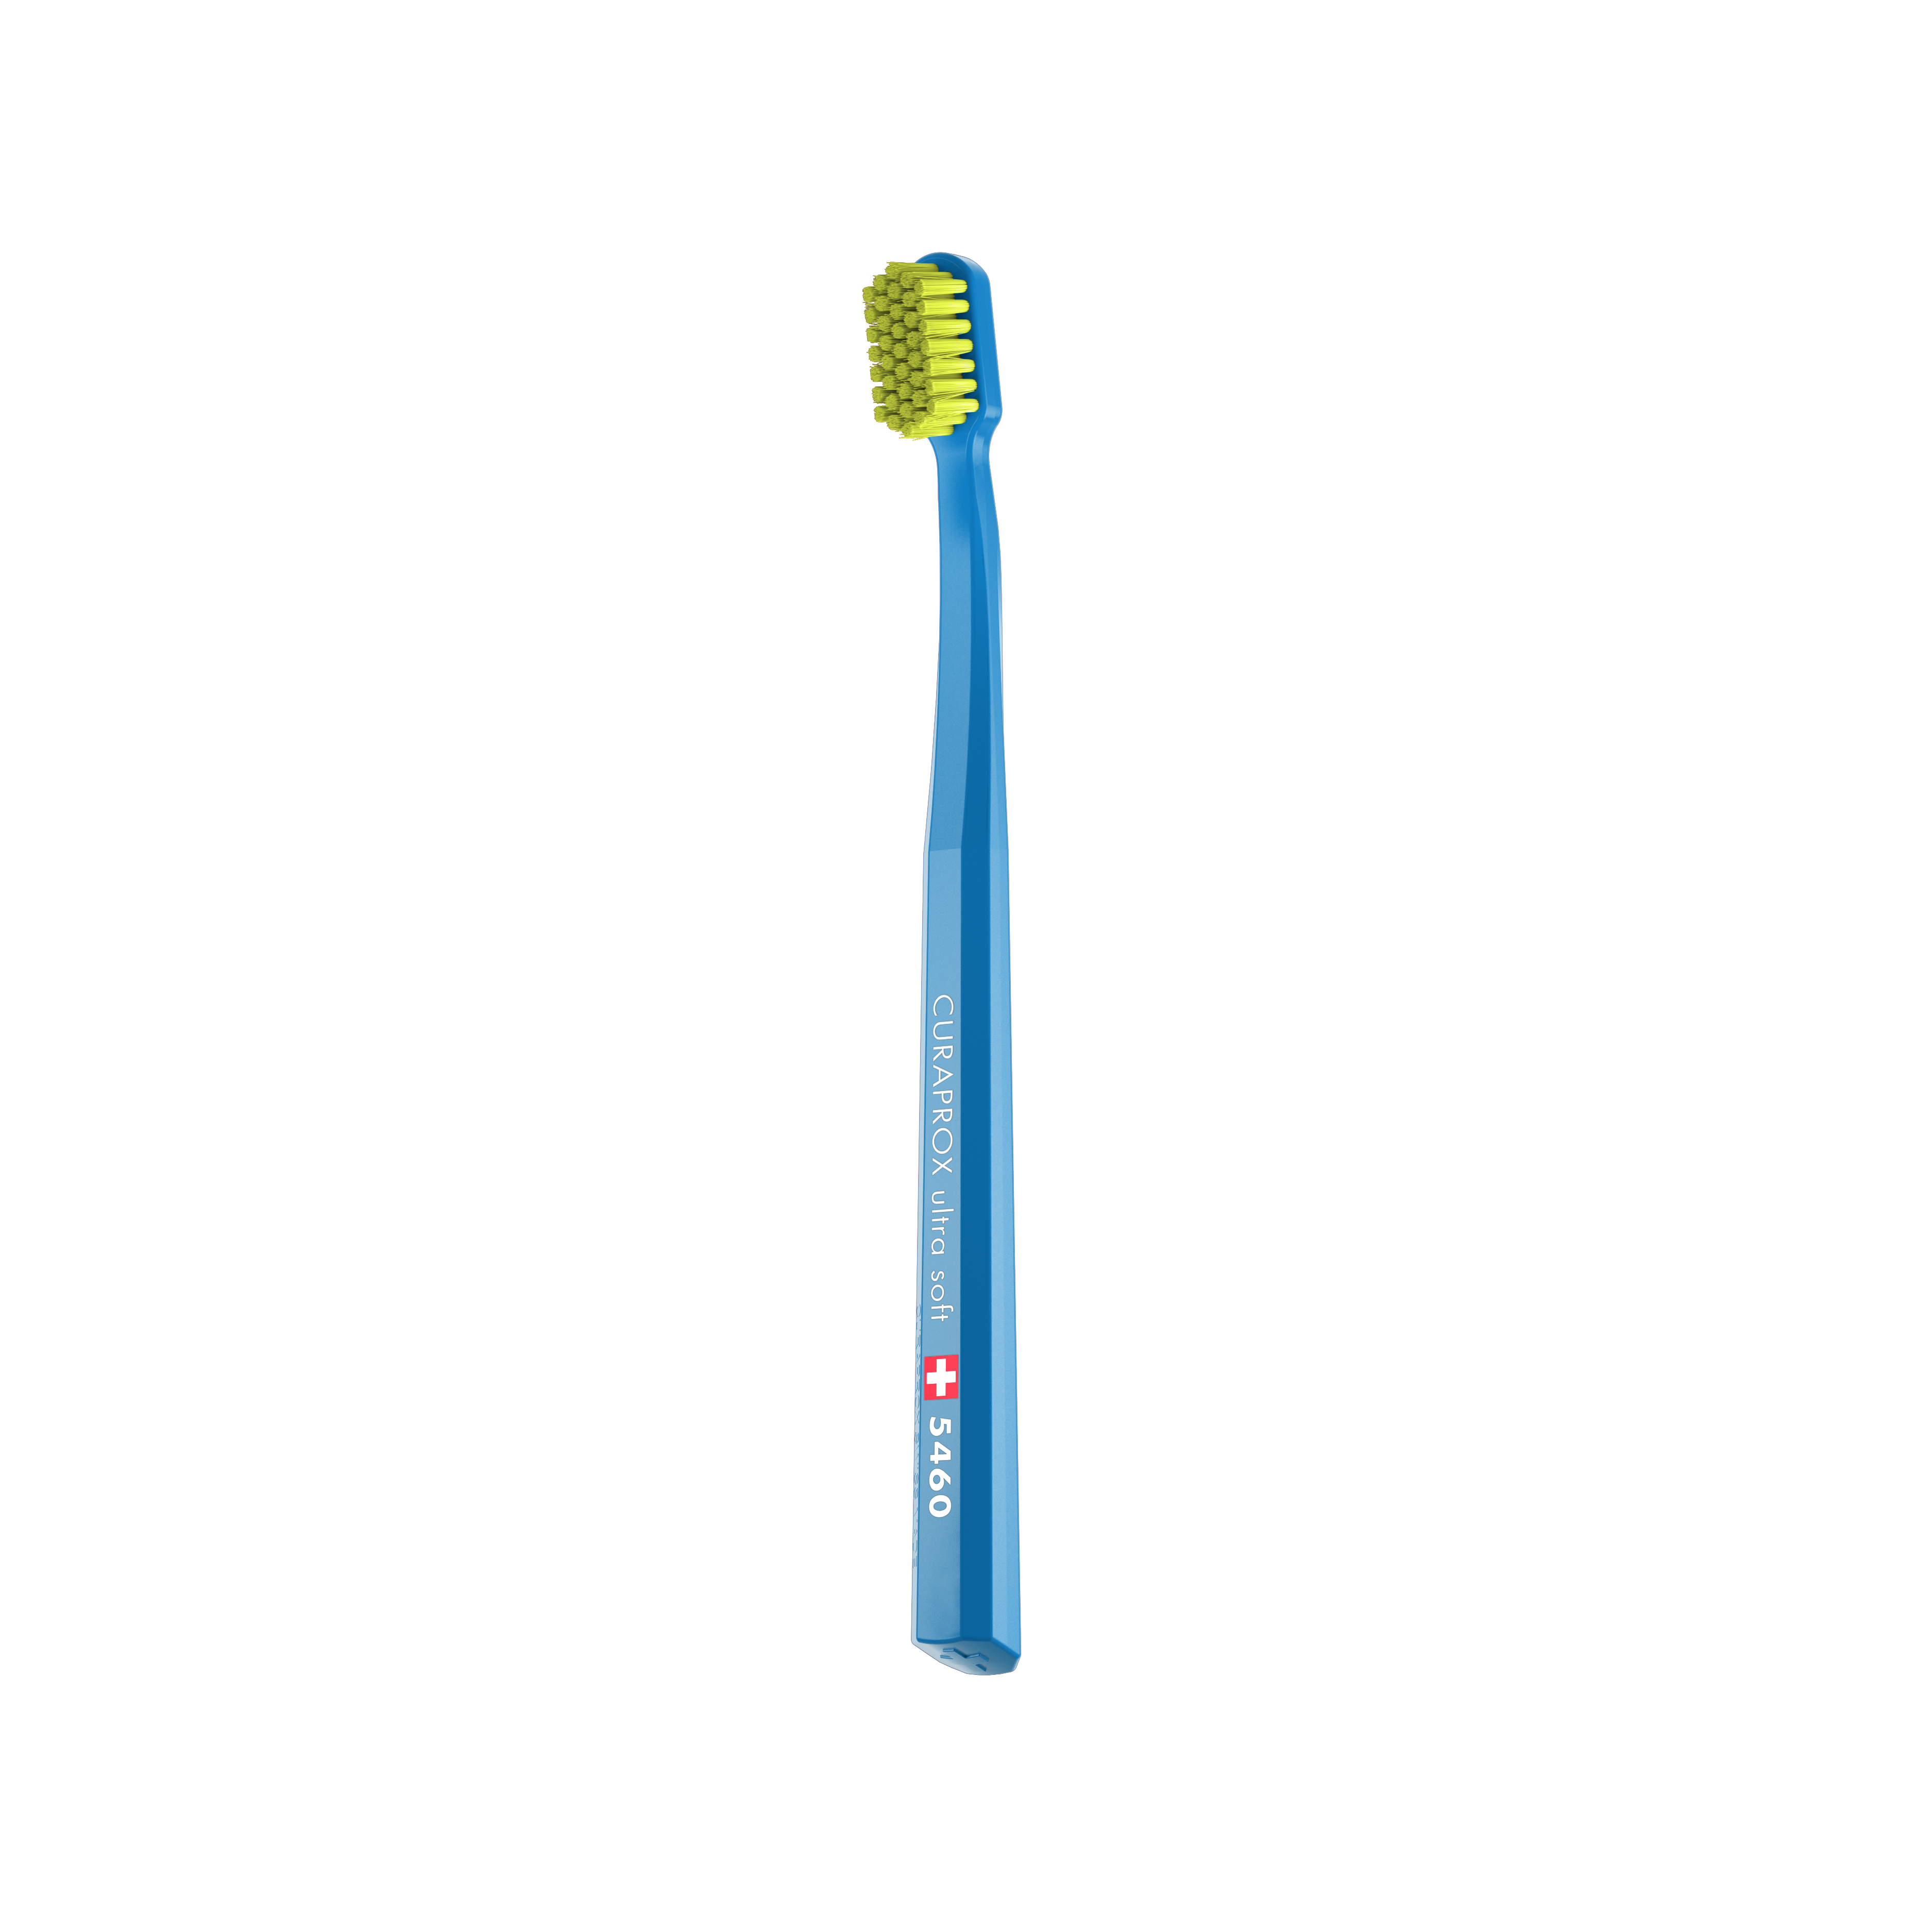 Productshot Toothbrush Cs5460 Light Blue Green 45 Degree Left